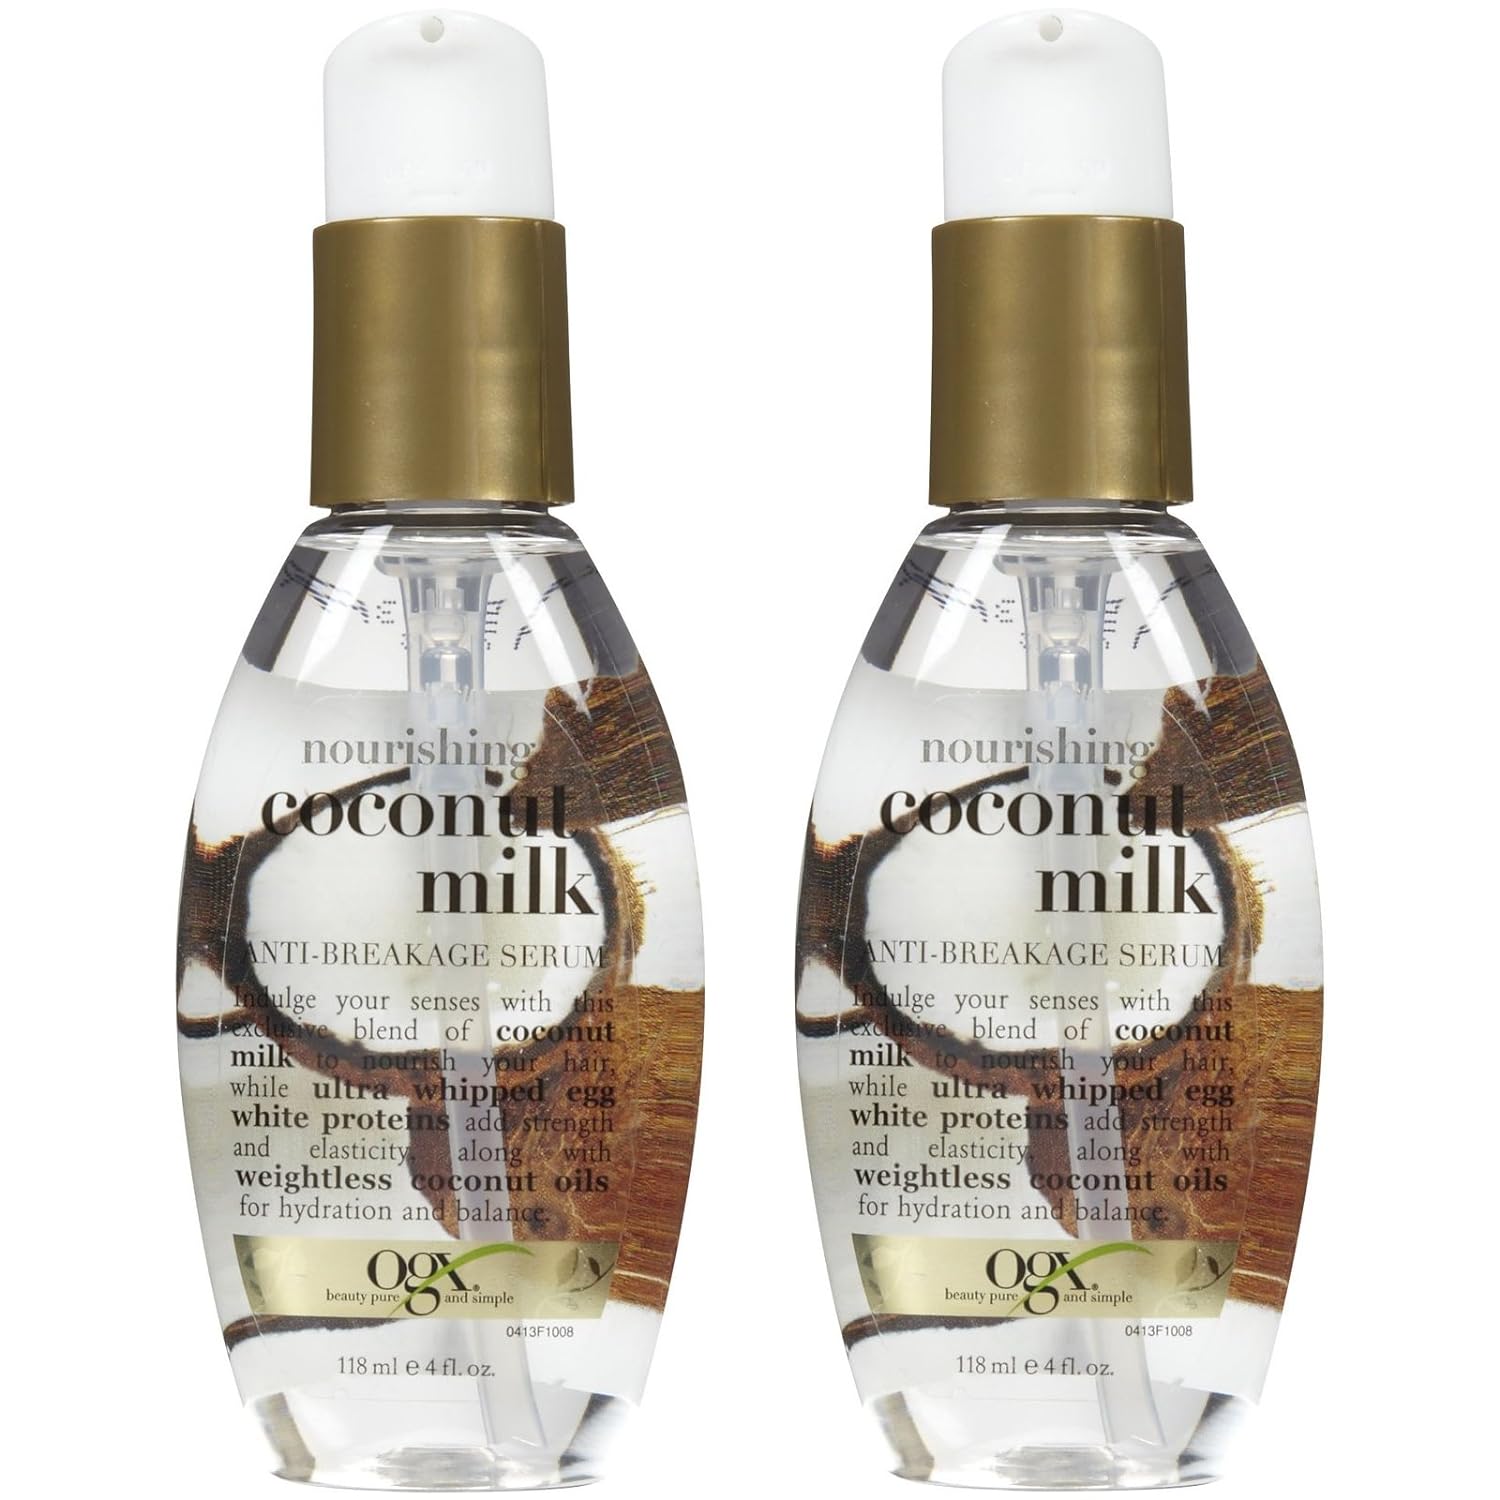 Esupli.com Organix Nourishing Coconut Milk Anti-Breakage Serum (2 pack)